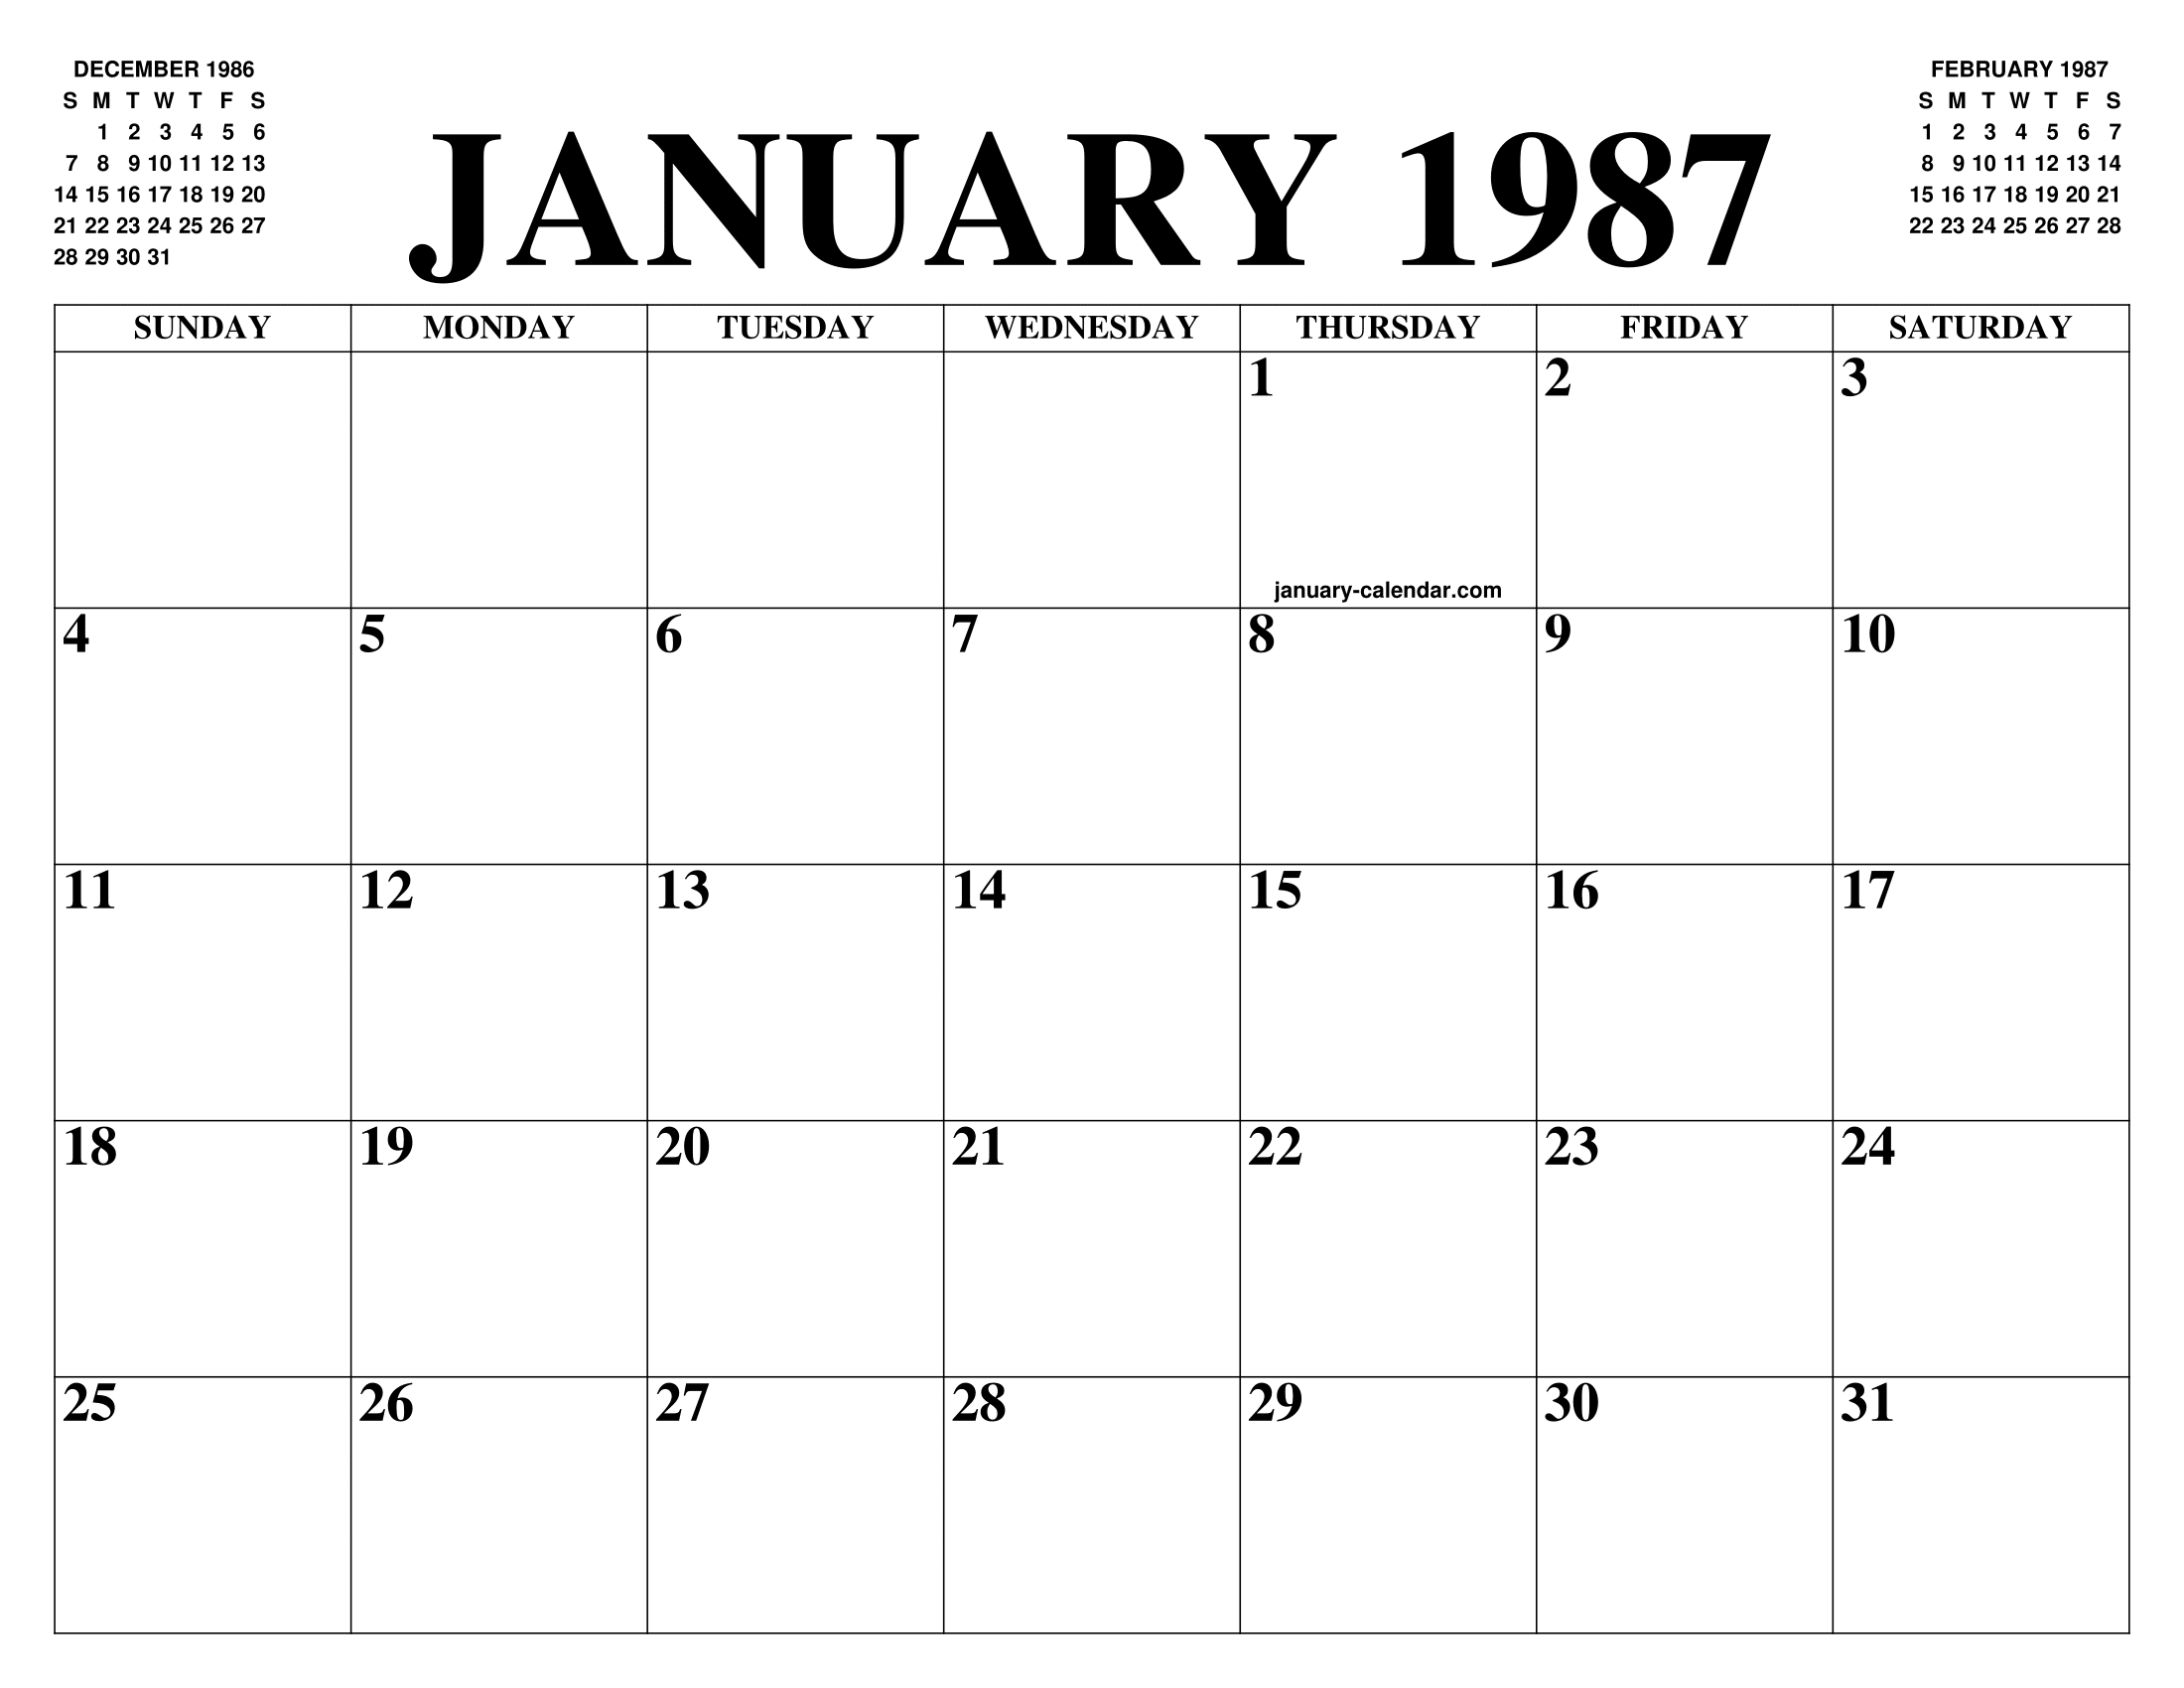 JANUARY 1987 CALENDAR OF THE MONTH: FREE PRINTABLE JANUARY CALENDAR OF